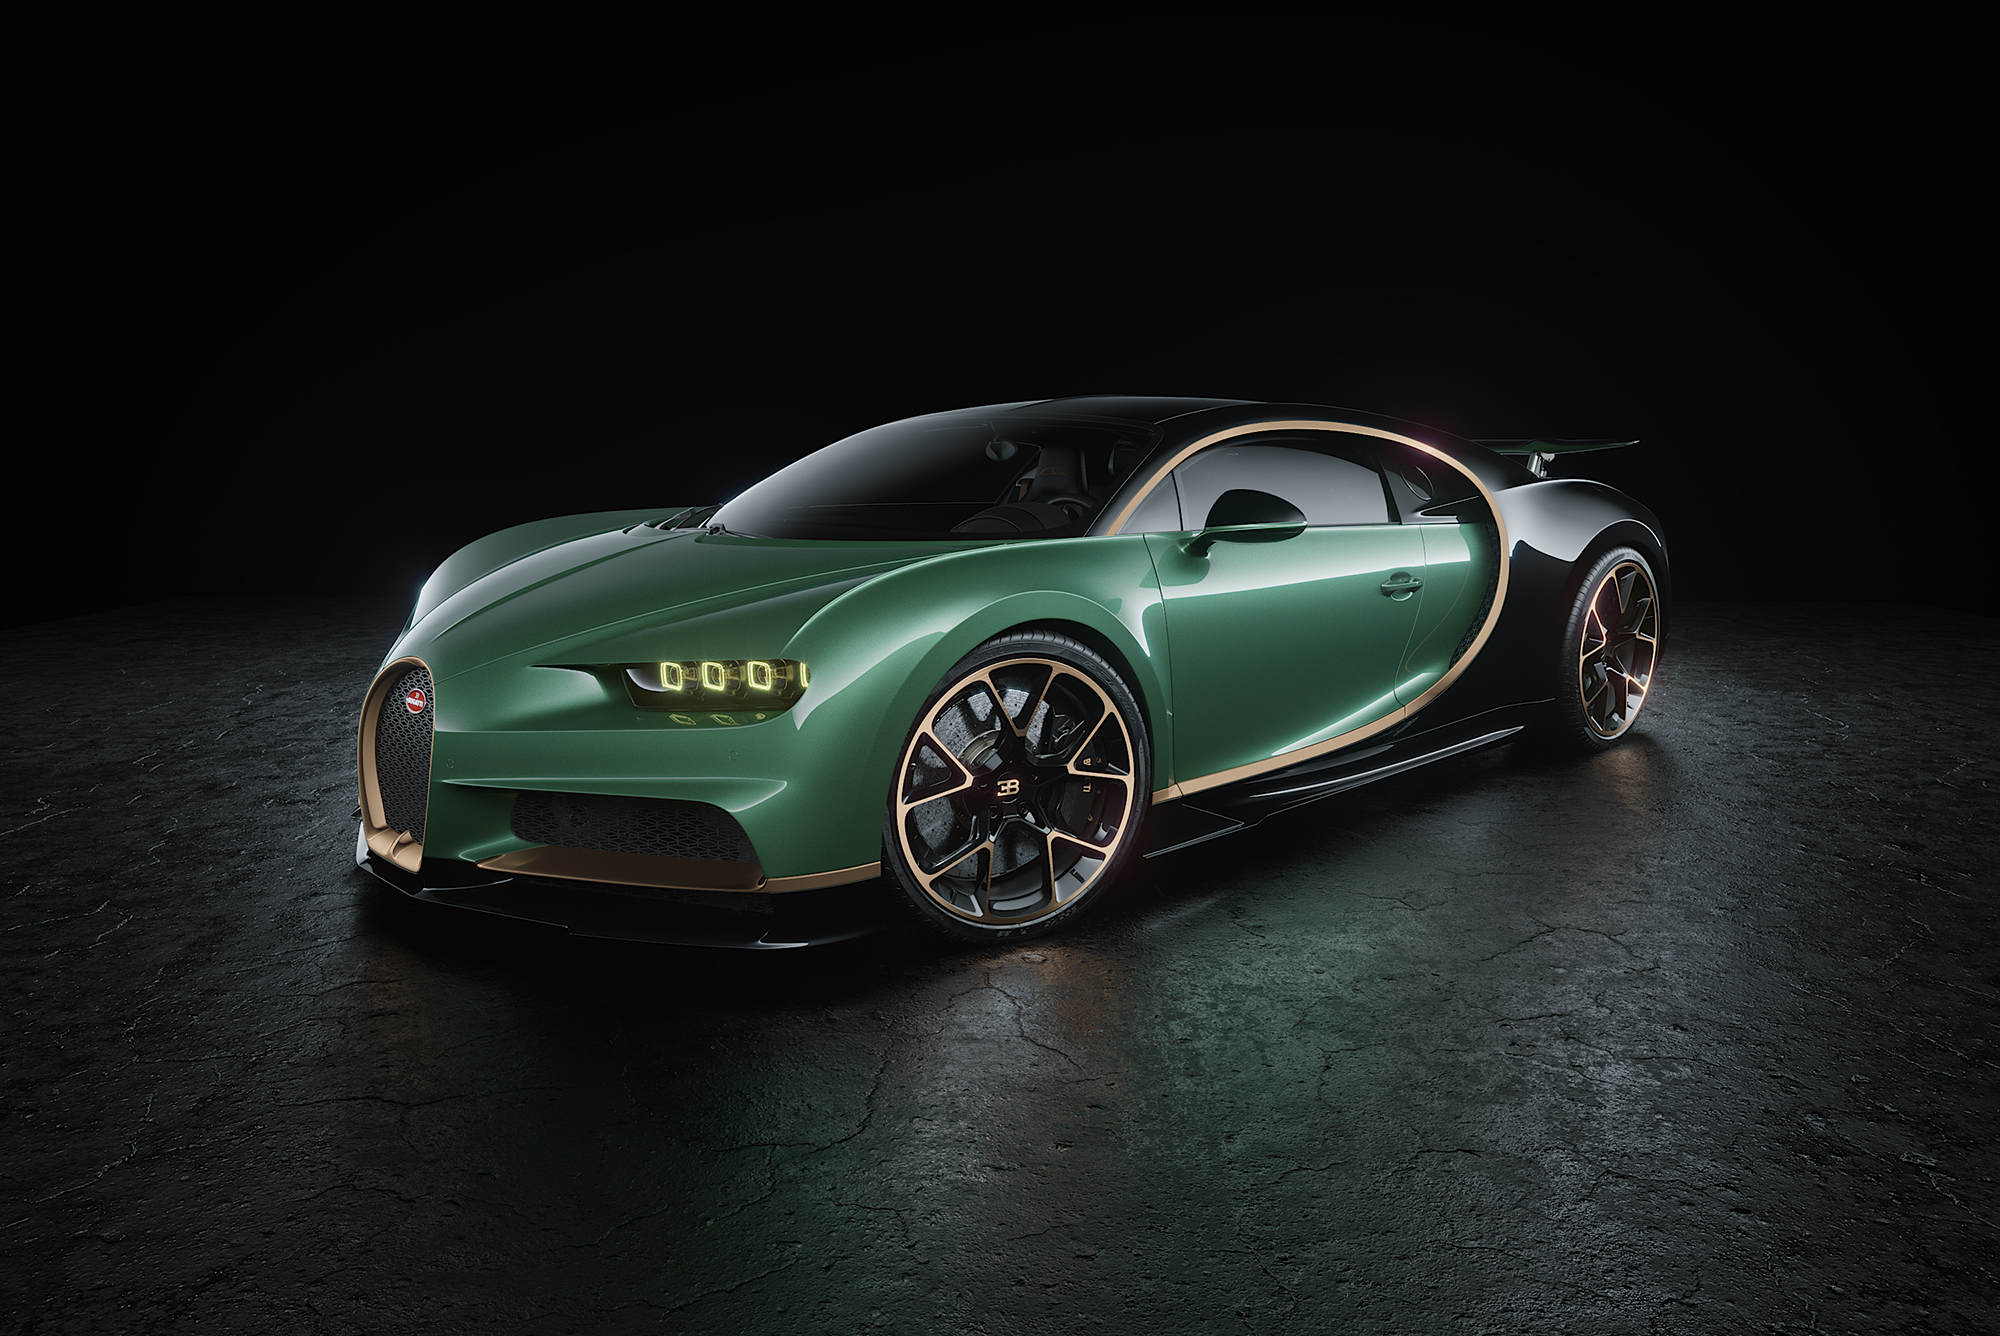 Green Bugatti Chiron CGI, HD Cars, 4k Wallpaper, Image, Background, Photo and Picture